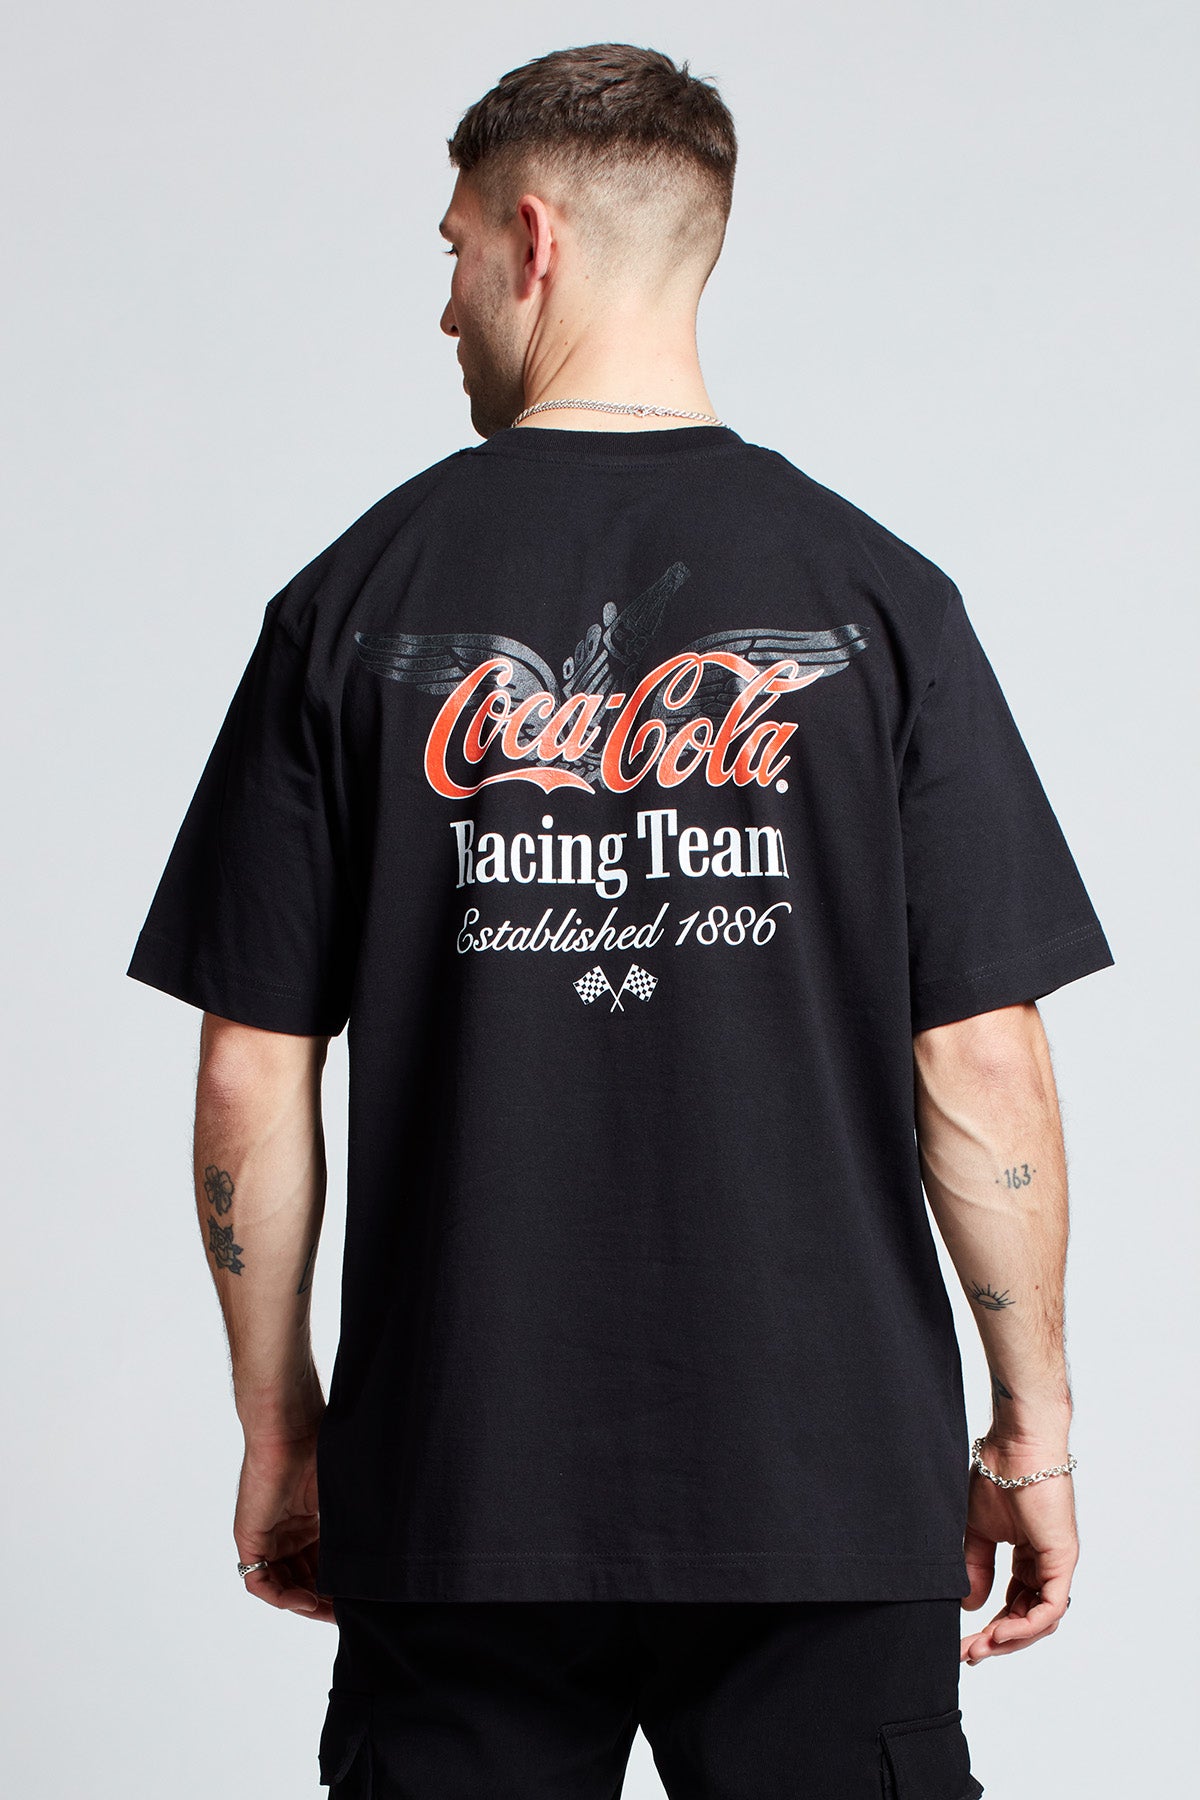 Coca-Cola Racing Team T-shirt in Black